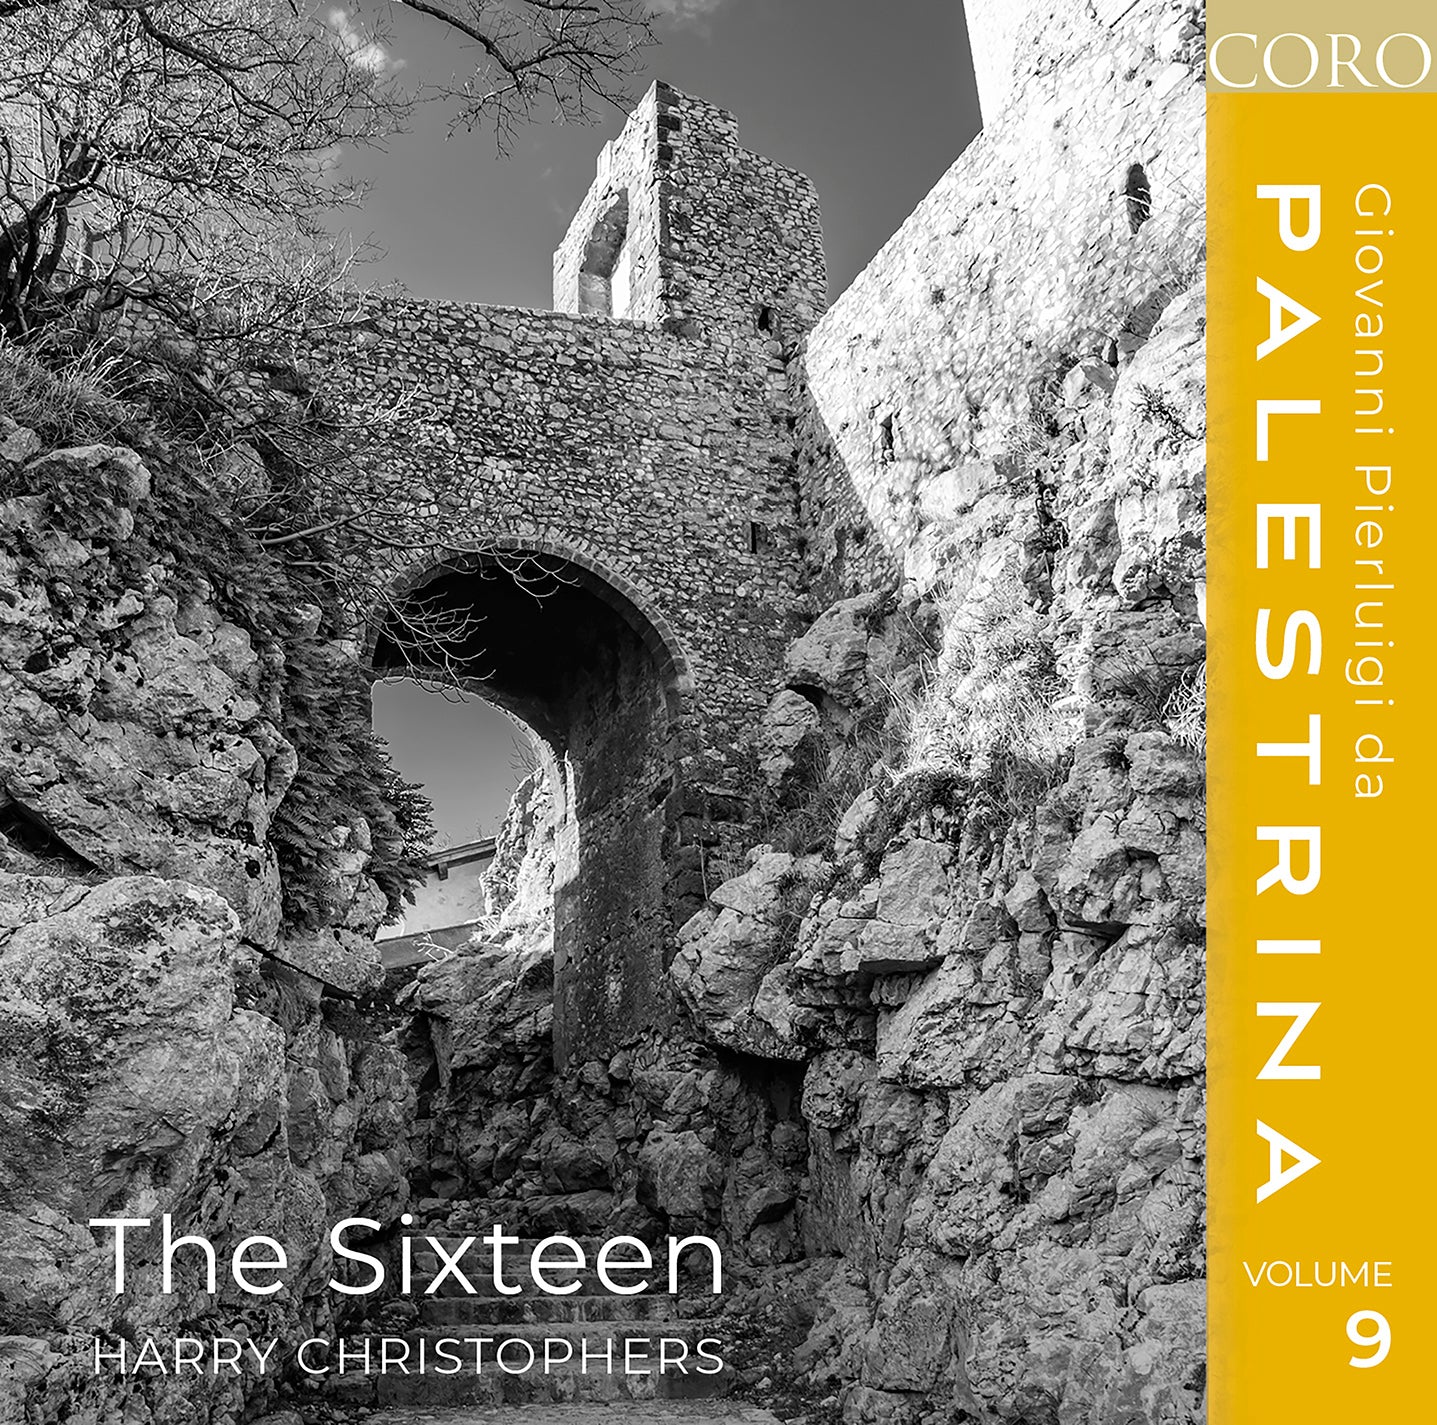 Palestrina: Vol. 9 / Christophers, The Sixteen